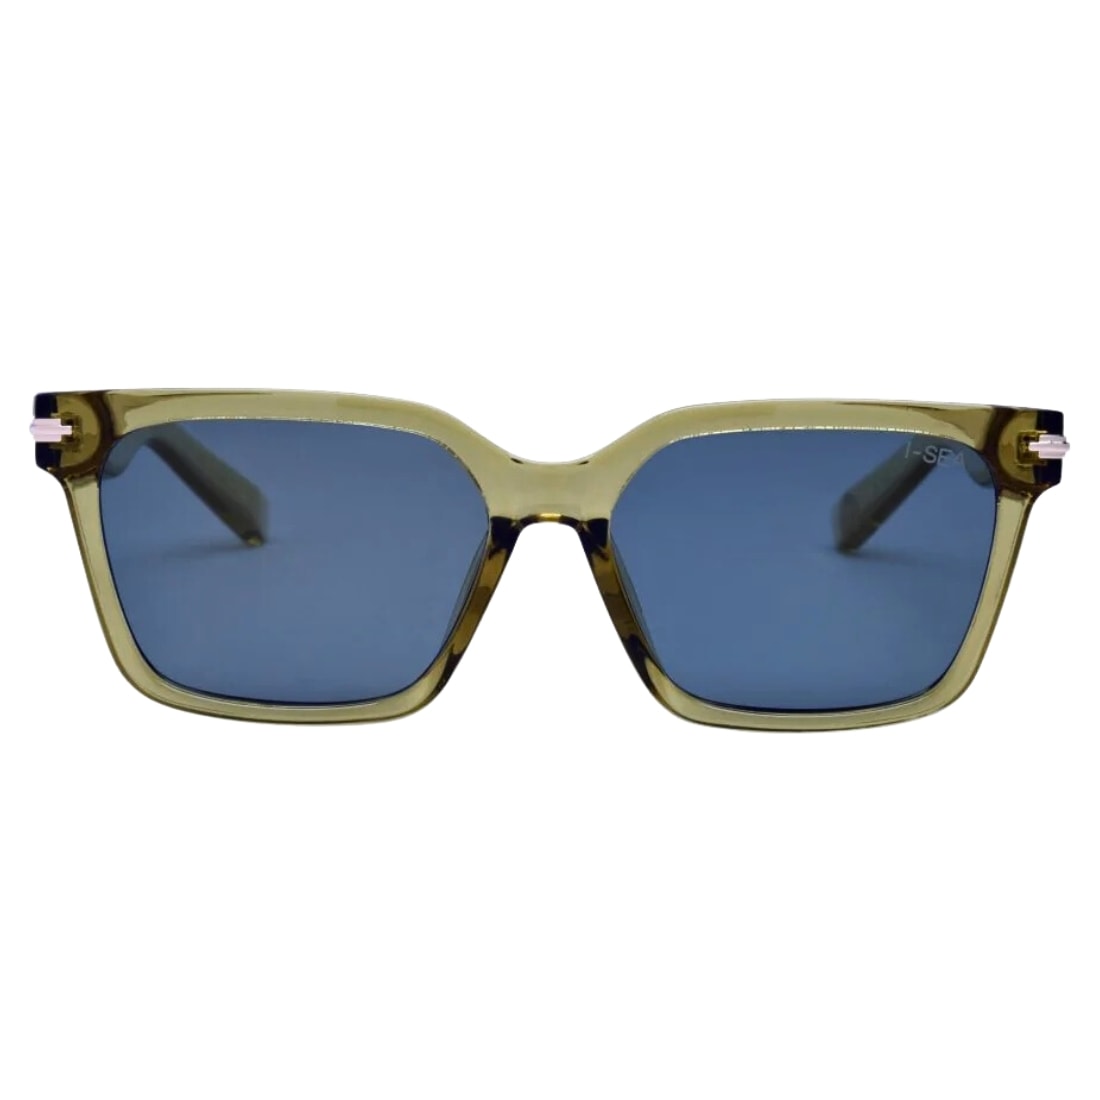 I-Sea Rising Sun Polarised Sunglasses - Olive/Navy Polarized Lens